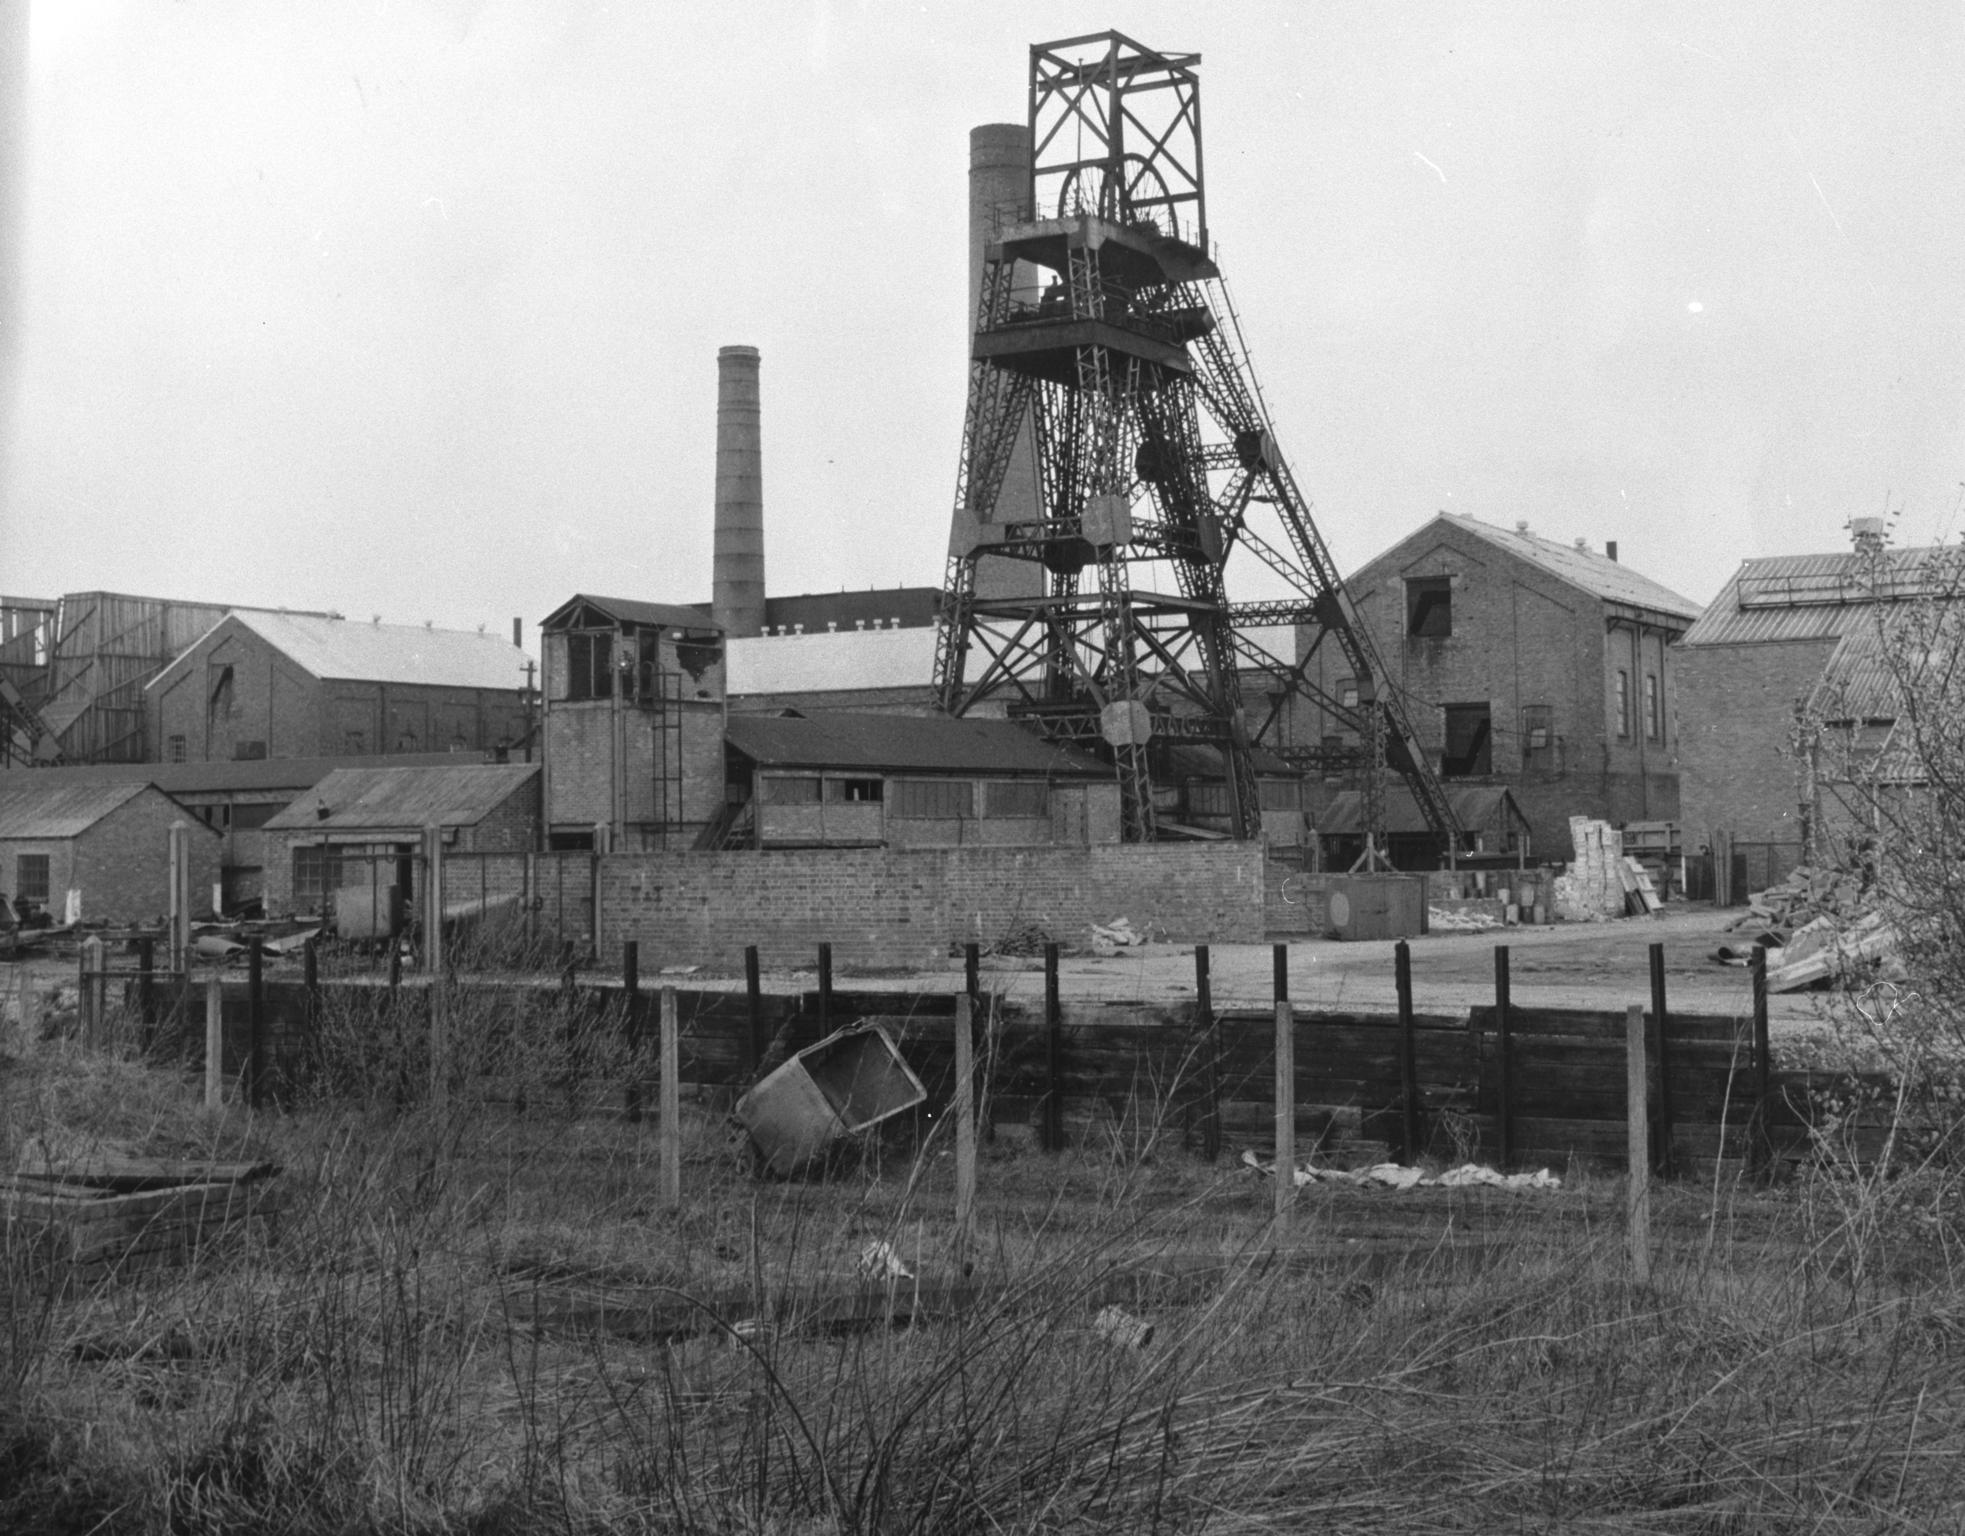 Llay Main Colliery, film negative